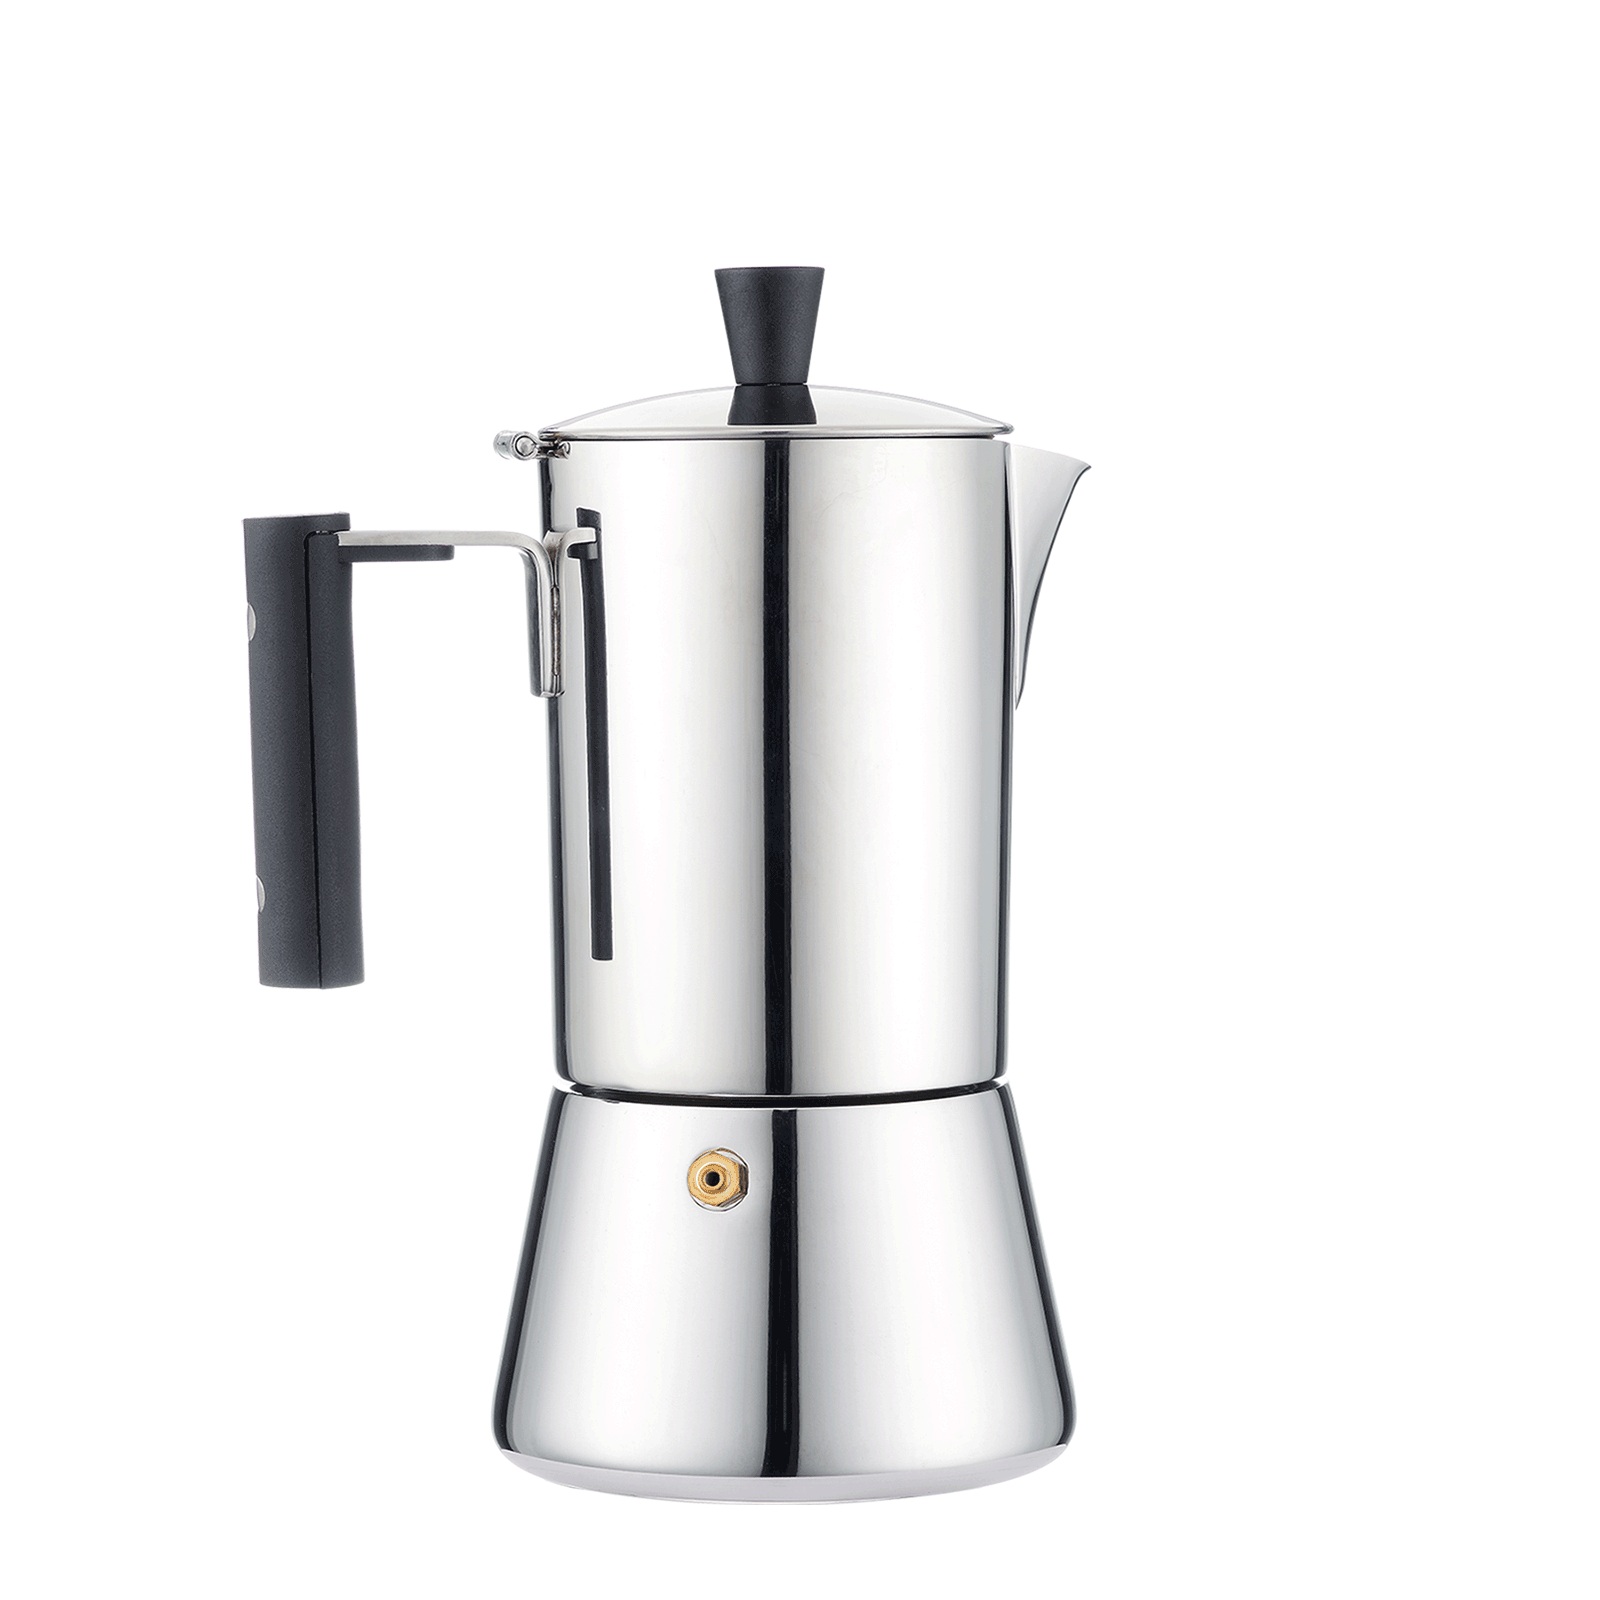 Bialetti Fiammetta Italian Moka Espresso Stovetop Coffee Maker Pot 4 Cups Induction - Grey